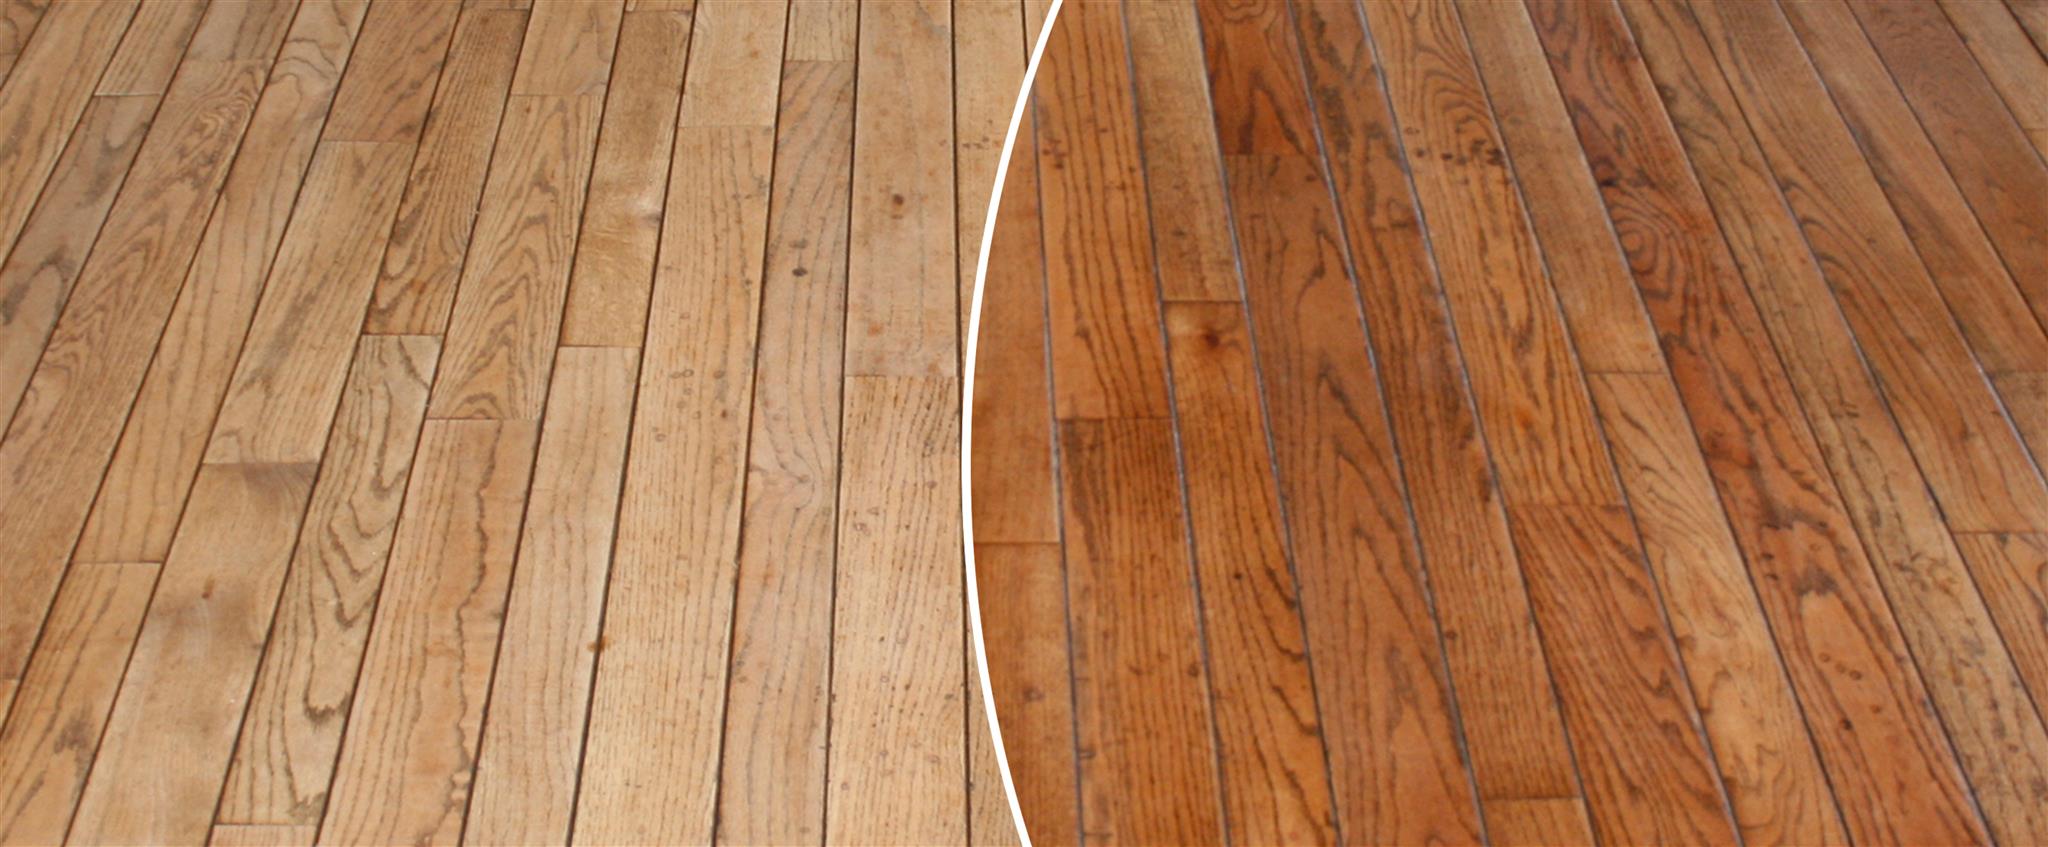 Wood Floor Refinishing Services N Hance, Hardwood Floor Refinishing Monterey Ca